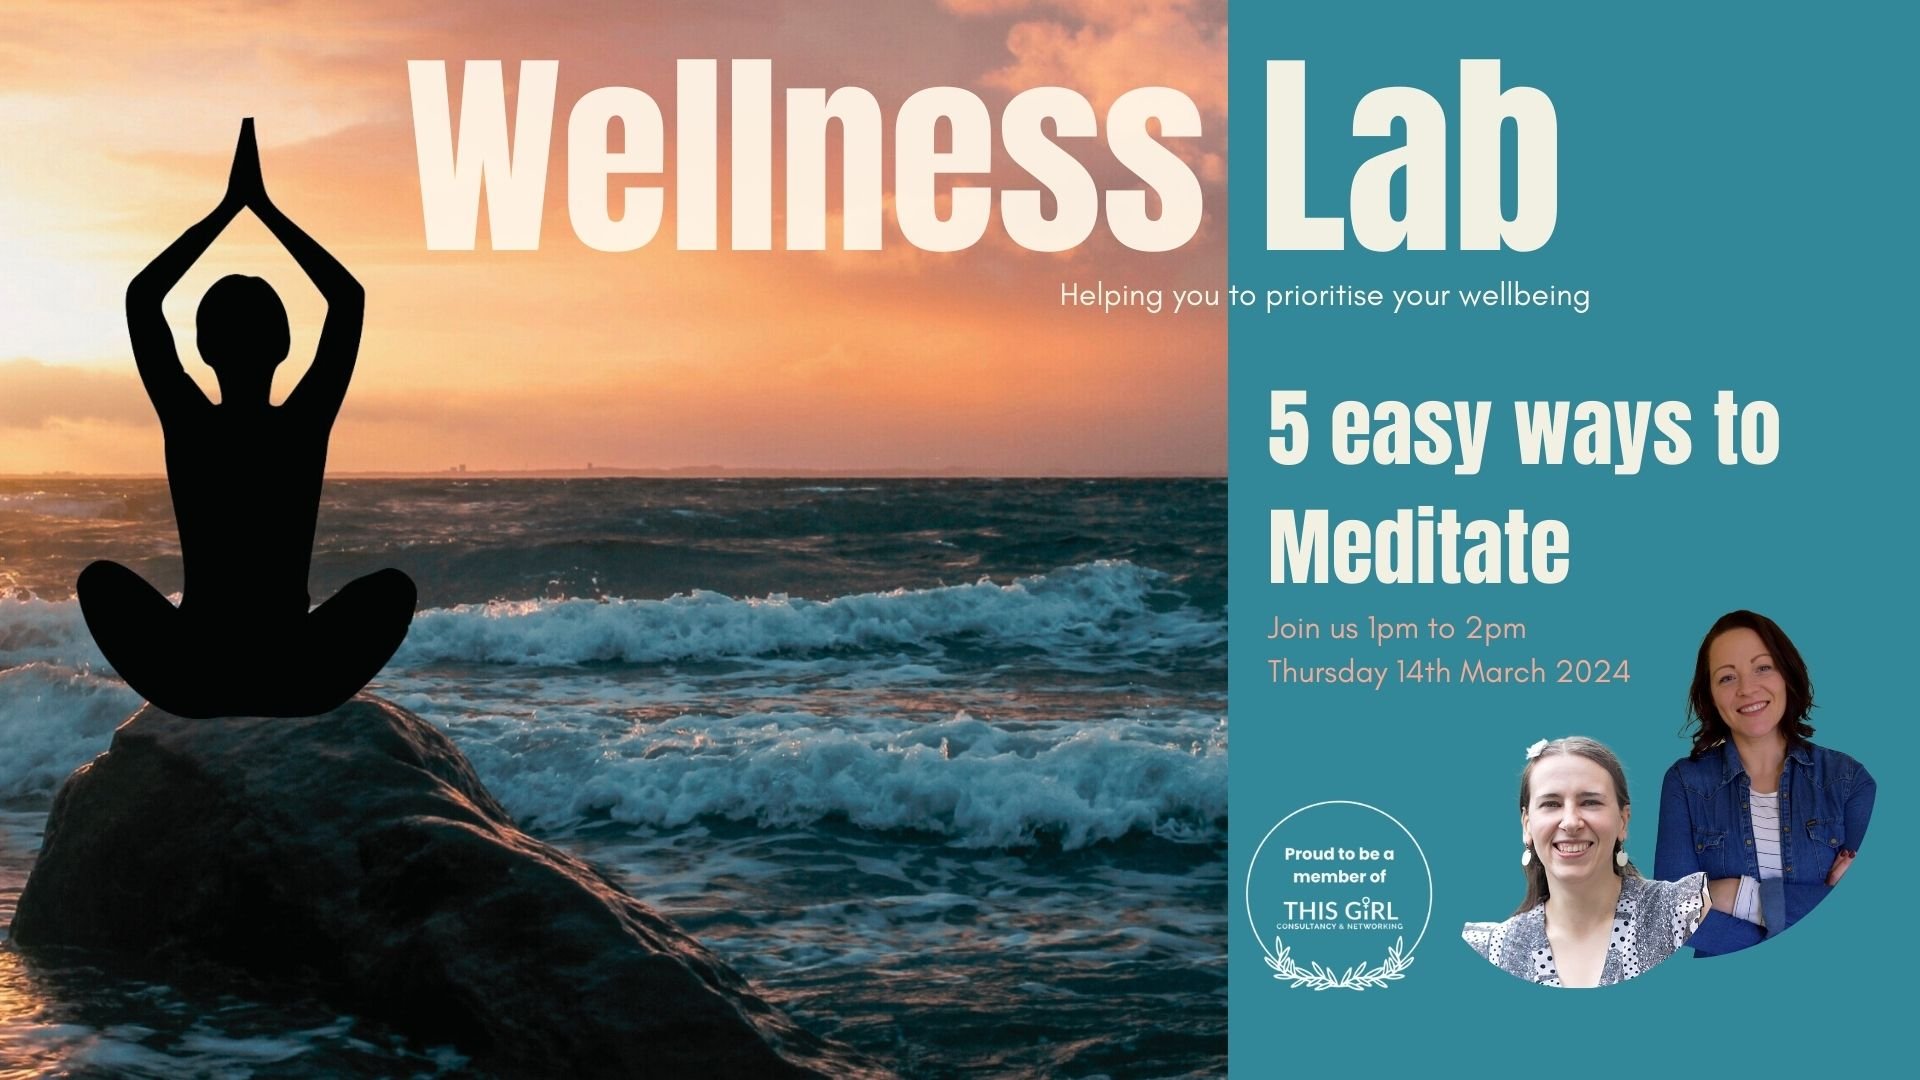 Wellness Lab: 5 easy ways to meditate